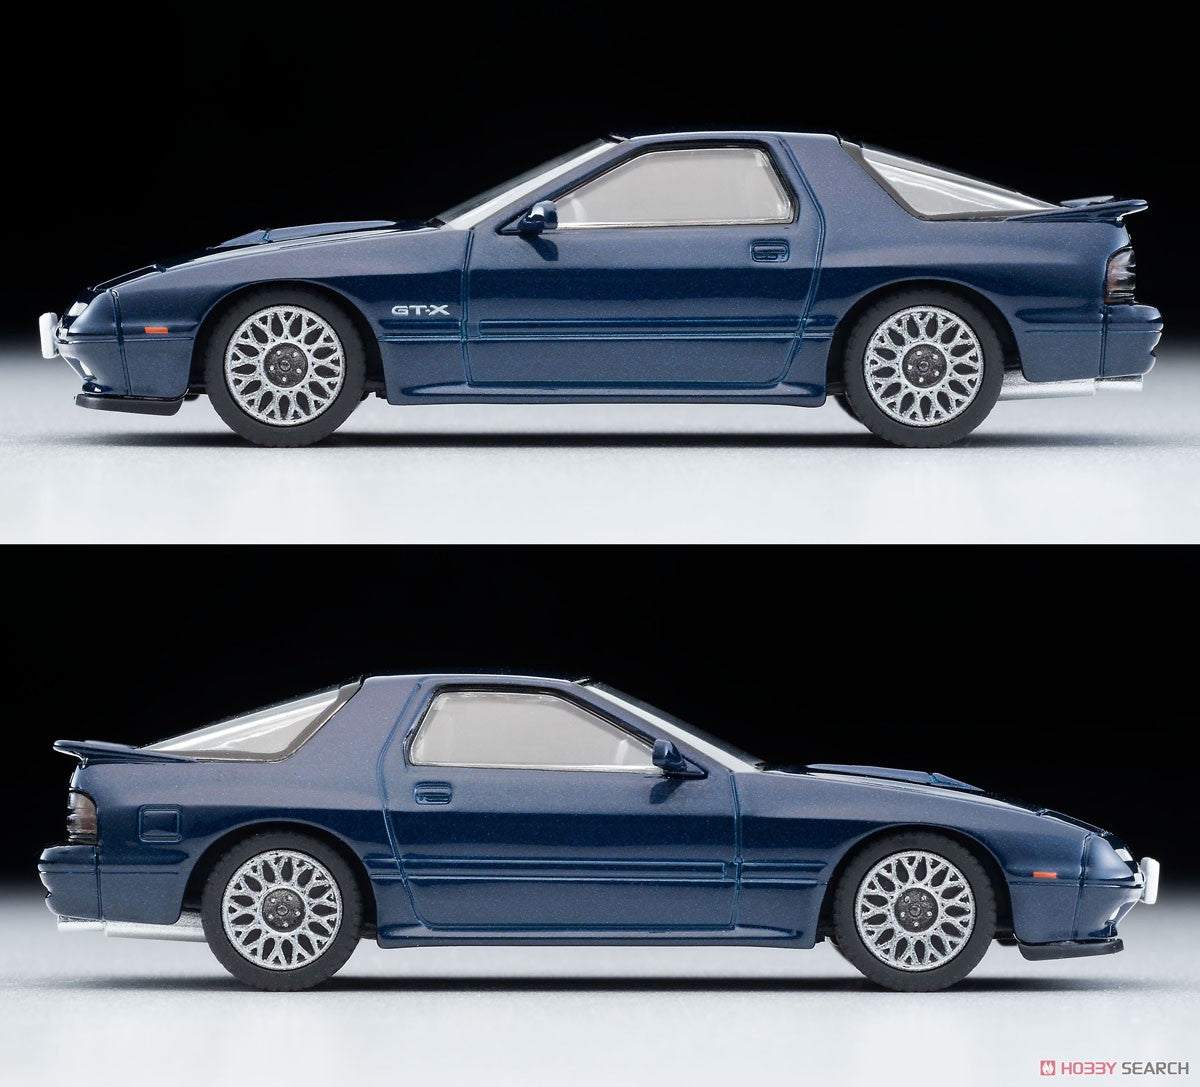 Tomica Limited Vintage Neo LV-N192g Mazda Savanna RX-7 GT-X Blue 1990 model